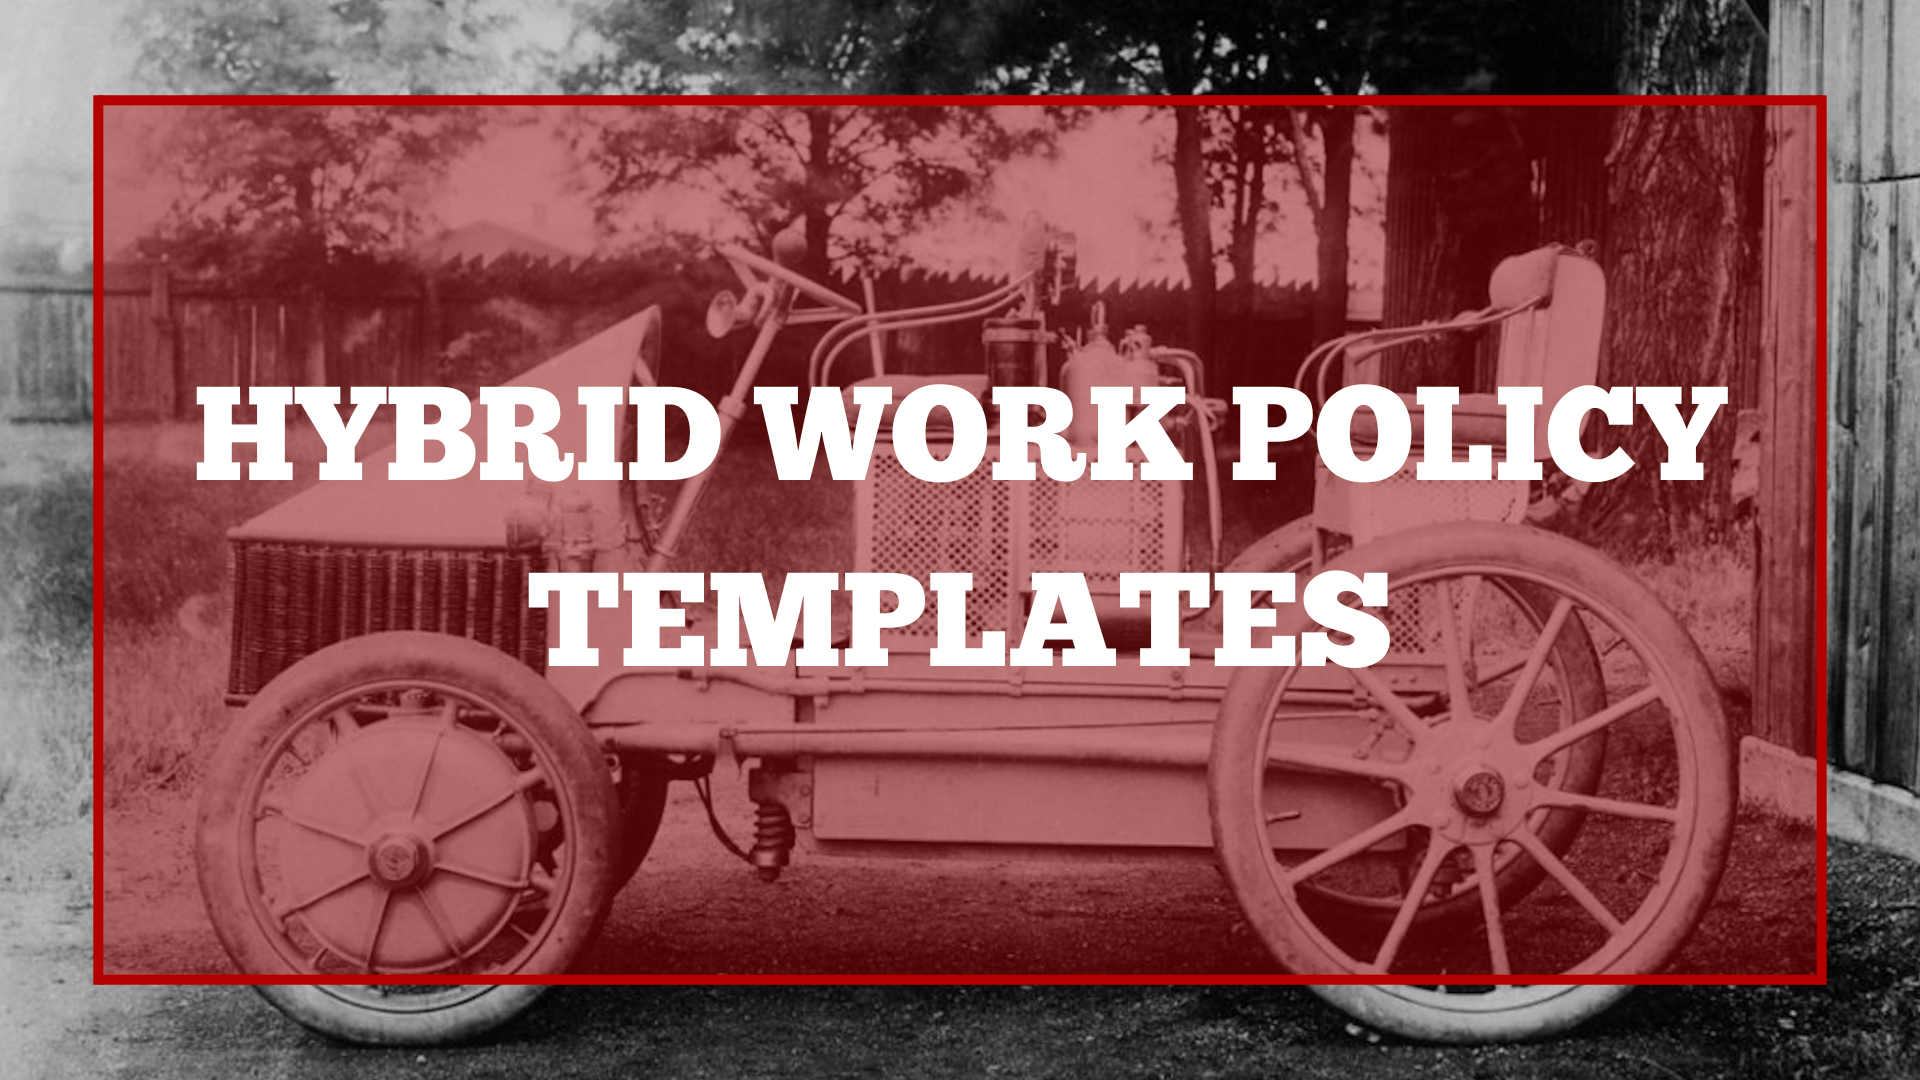 Hybrid work policy templates